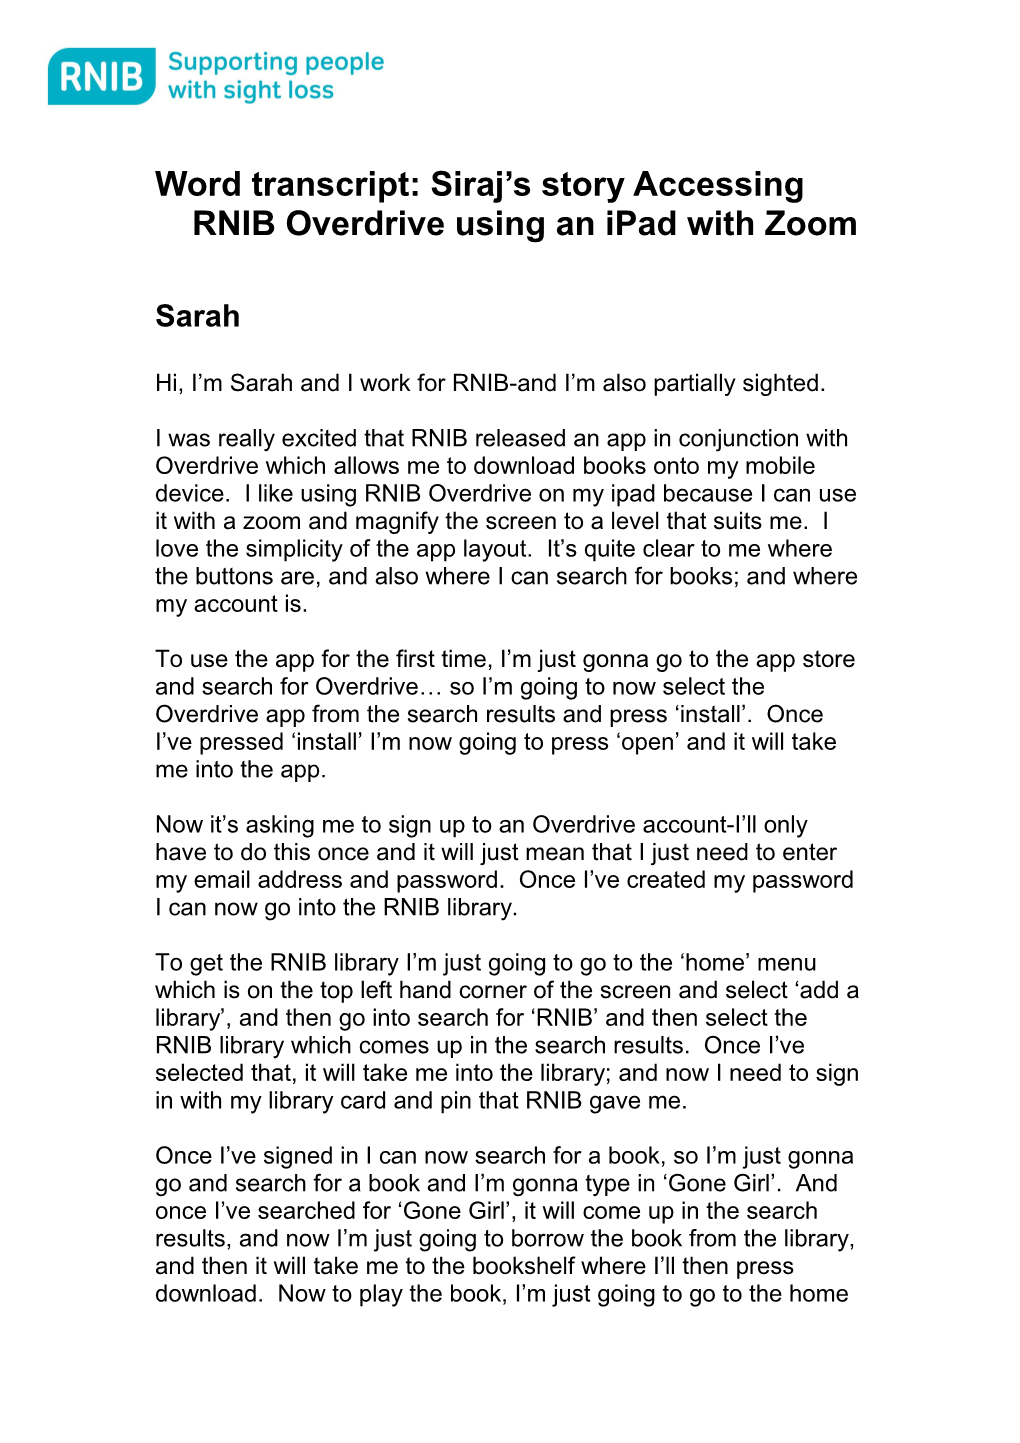 Word Transcript: Siraj S Storyaccessing RNIB Overdrive Using an Ipad with Zoom